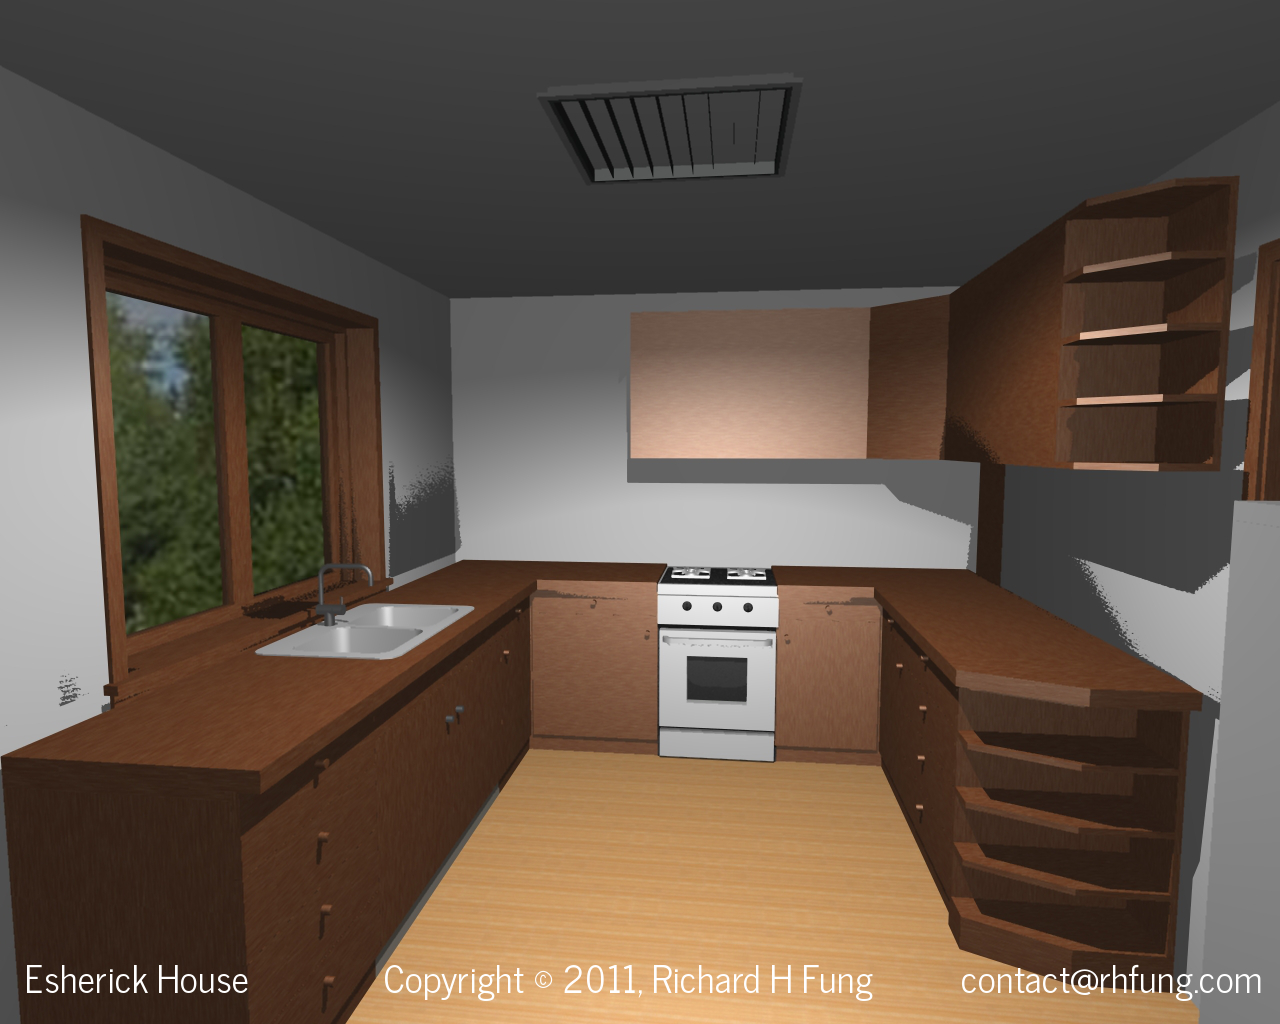 Esherick House kitchen 3D rendering